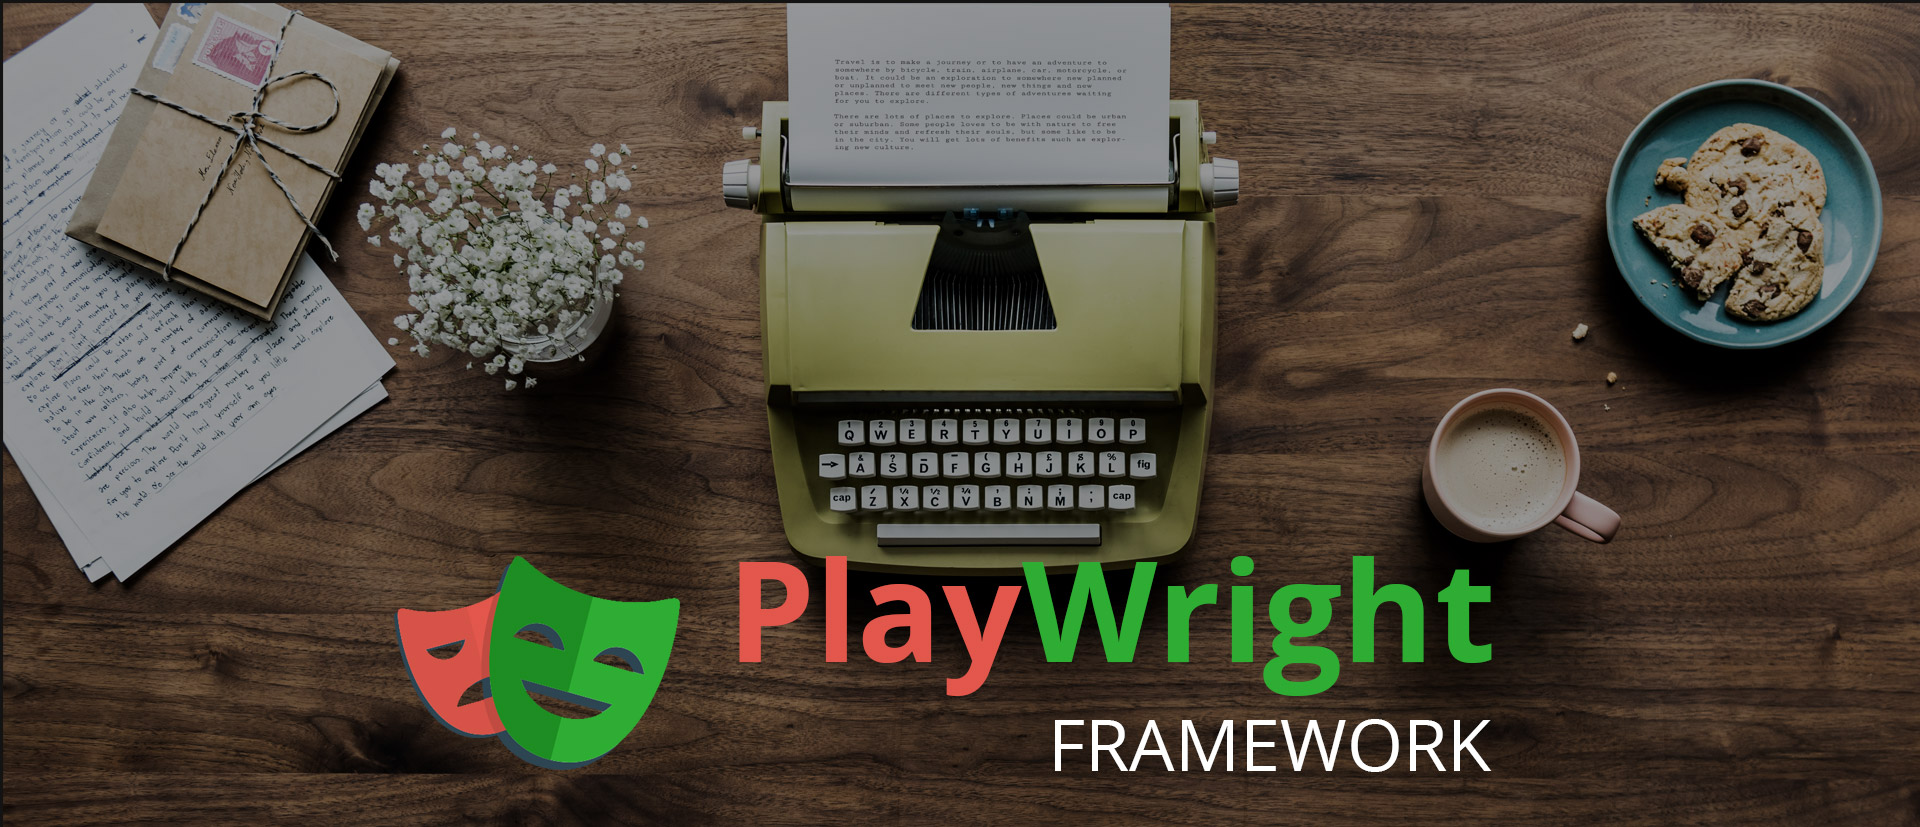 Playwright Framework Heading